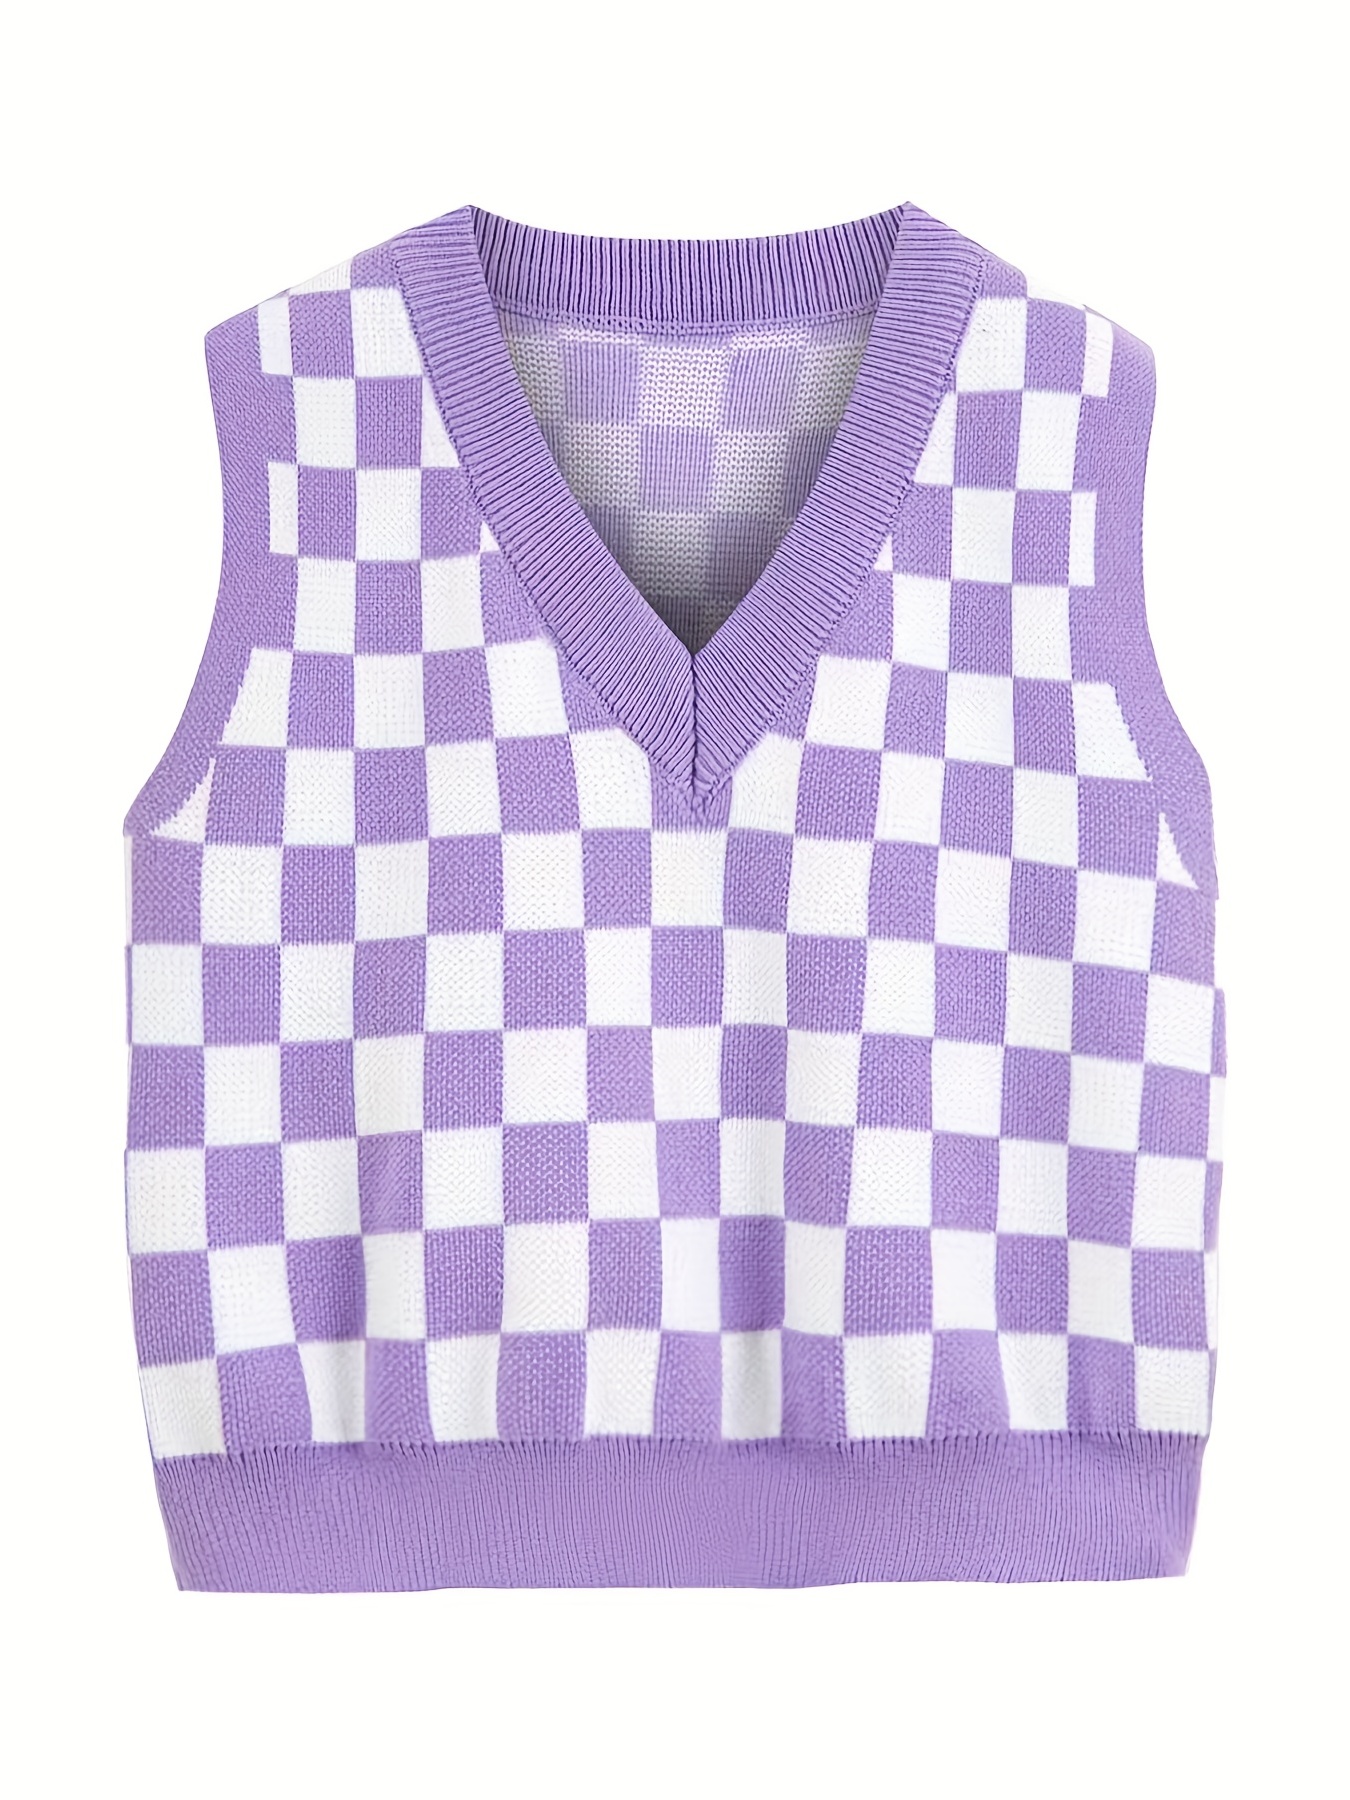 Boys And Girls Sweater Vest Korean Checkerboard Sleeveless Knitted